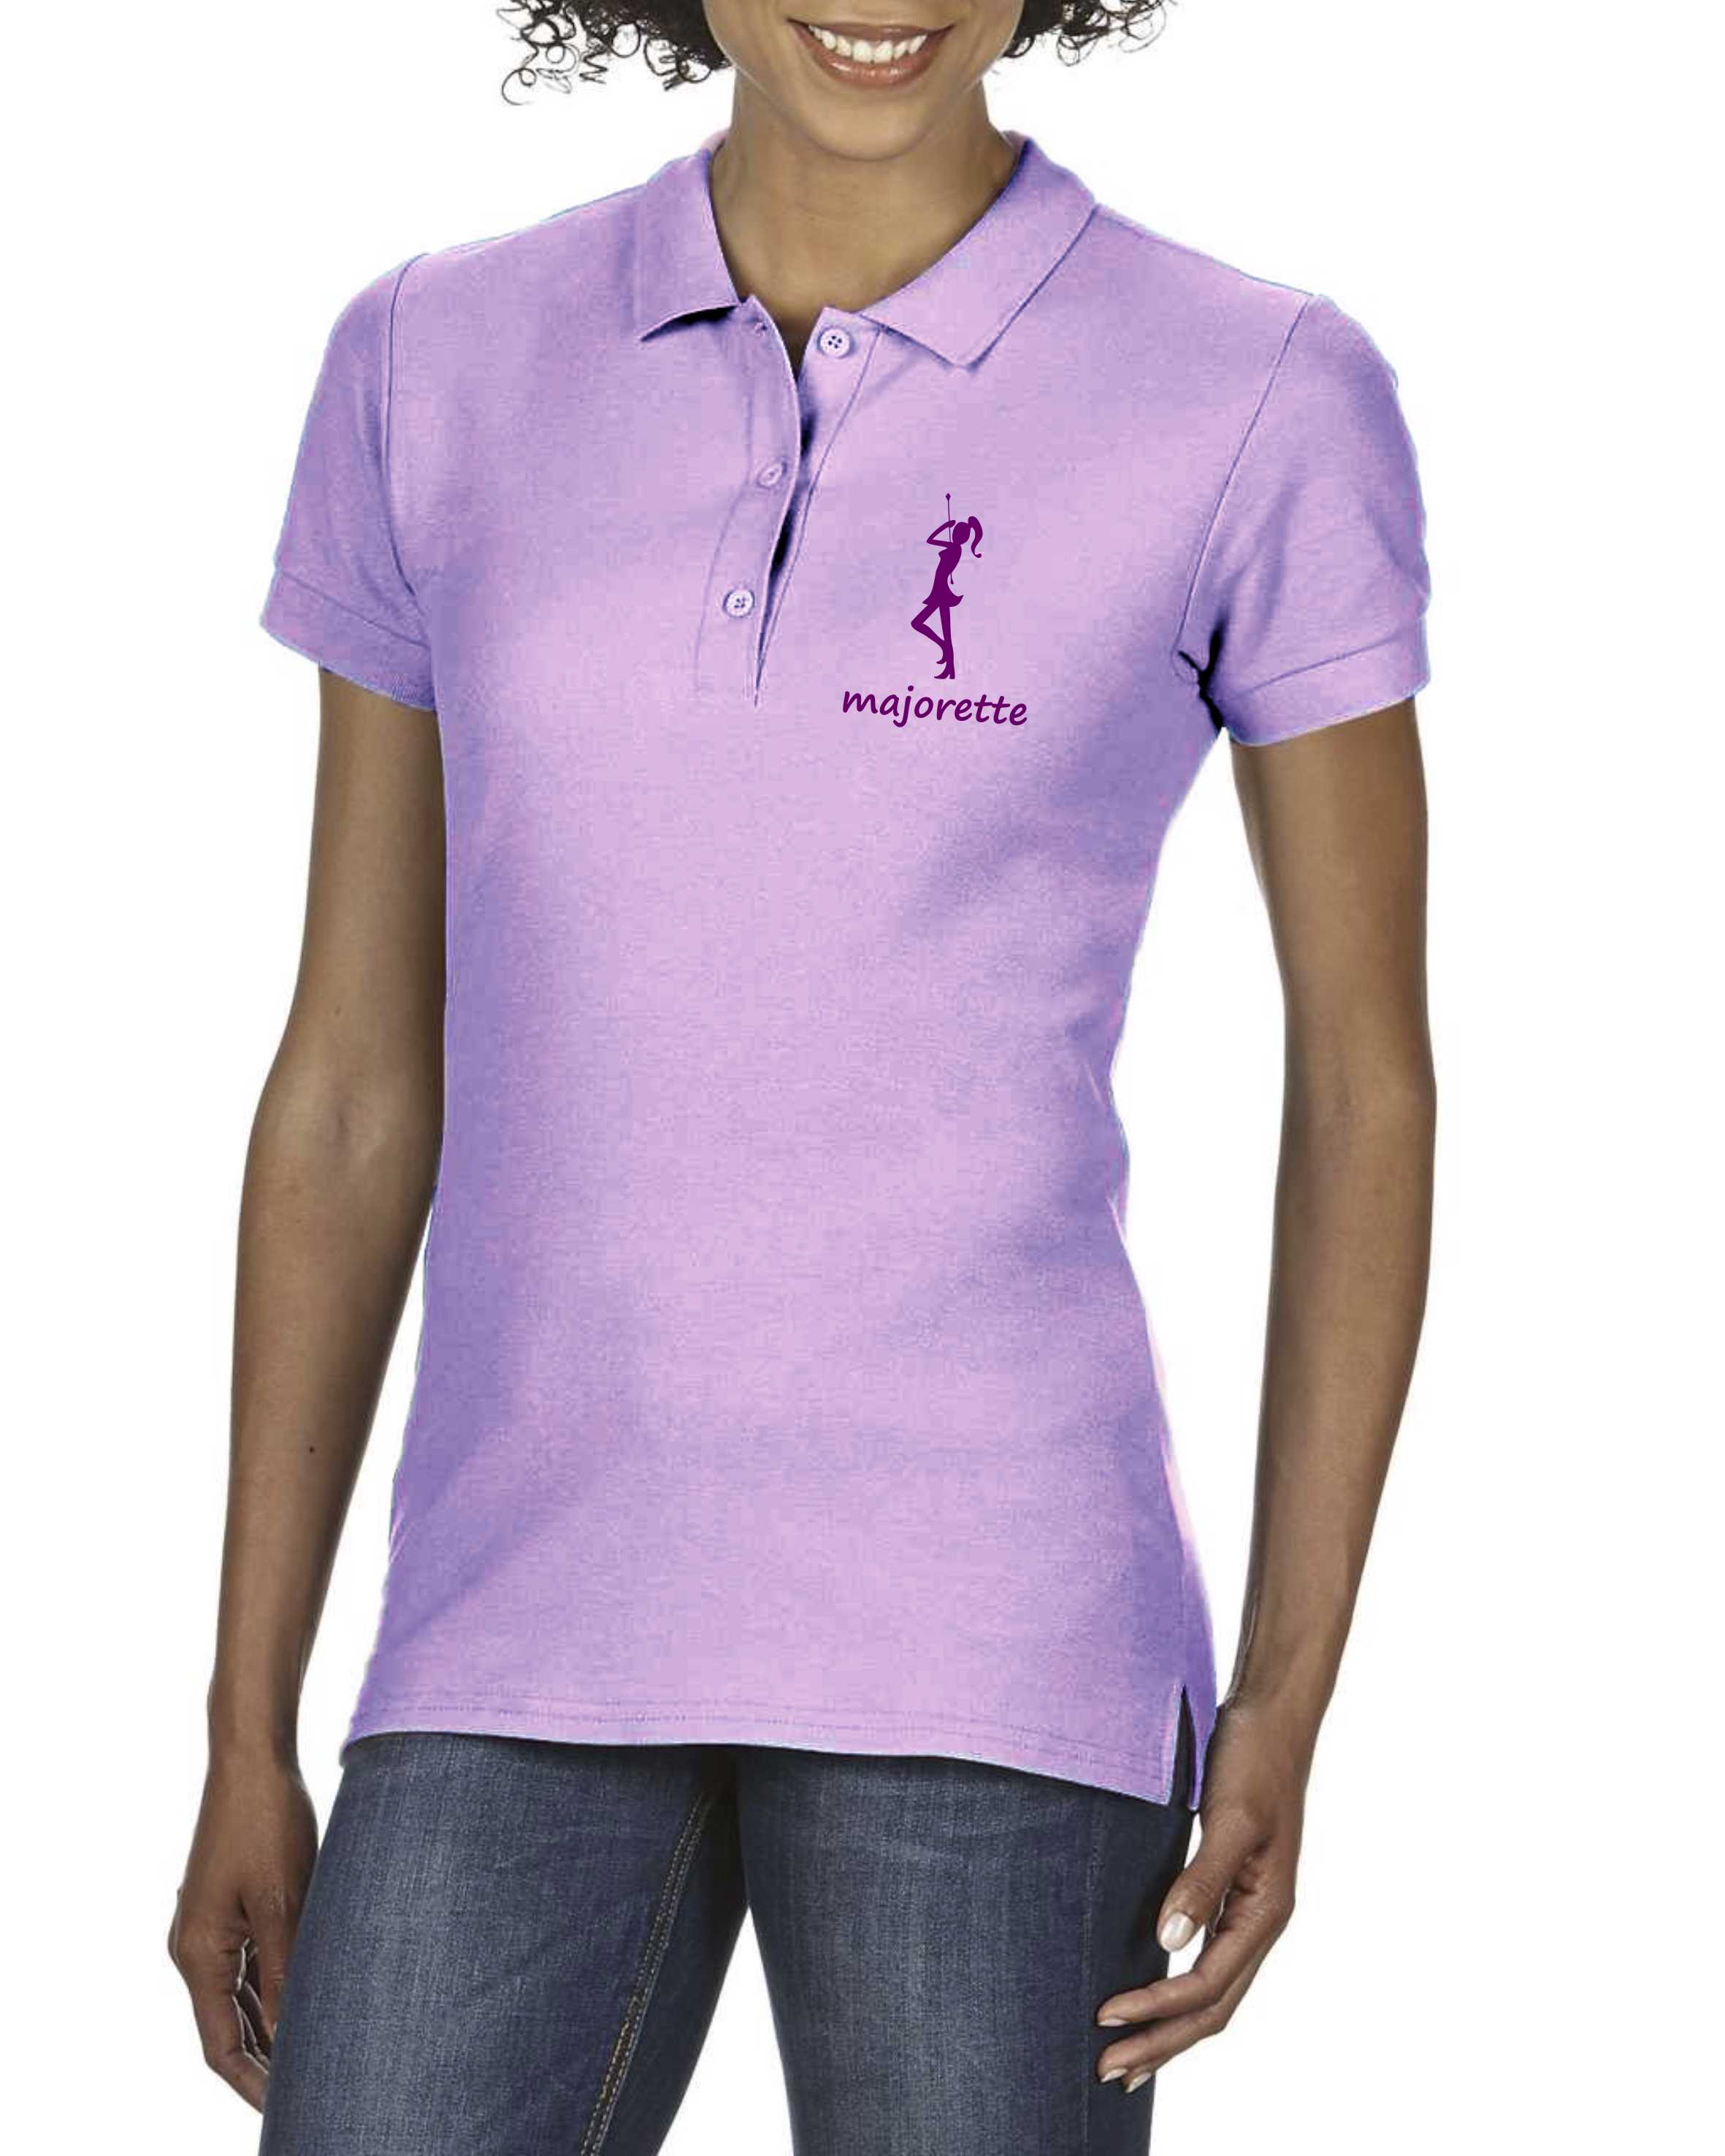 Damska koszulka polo, jasno fioletowa